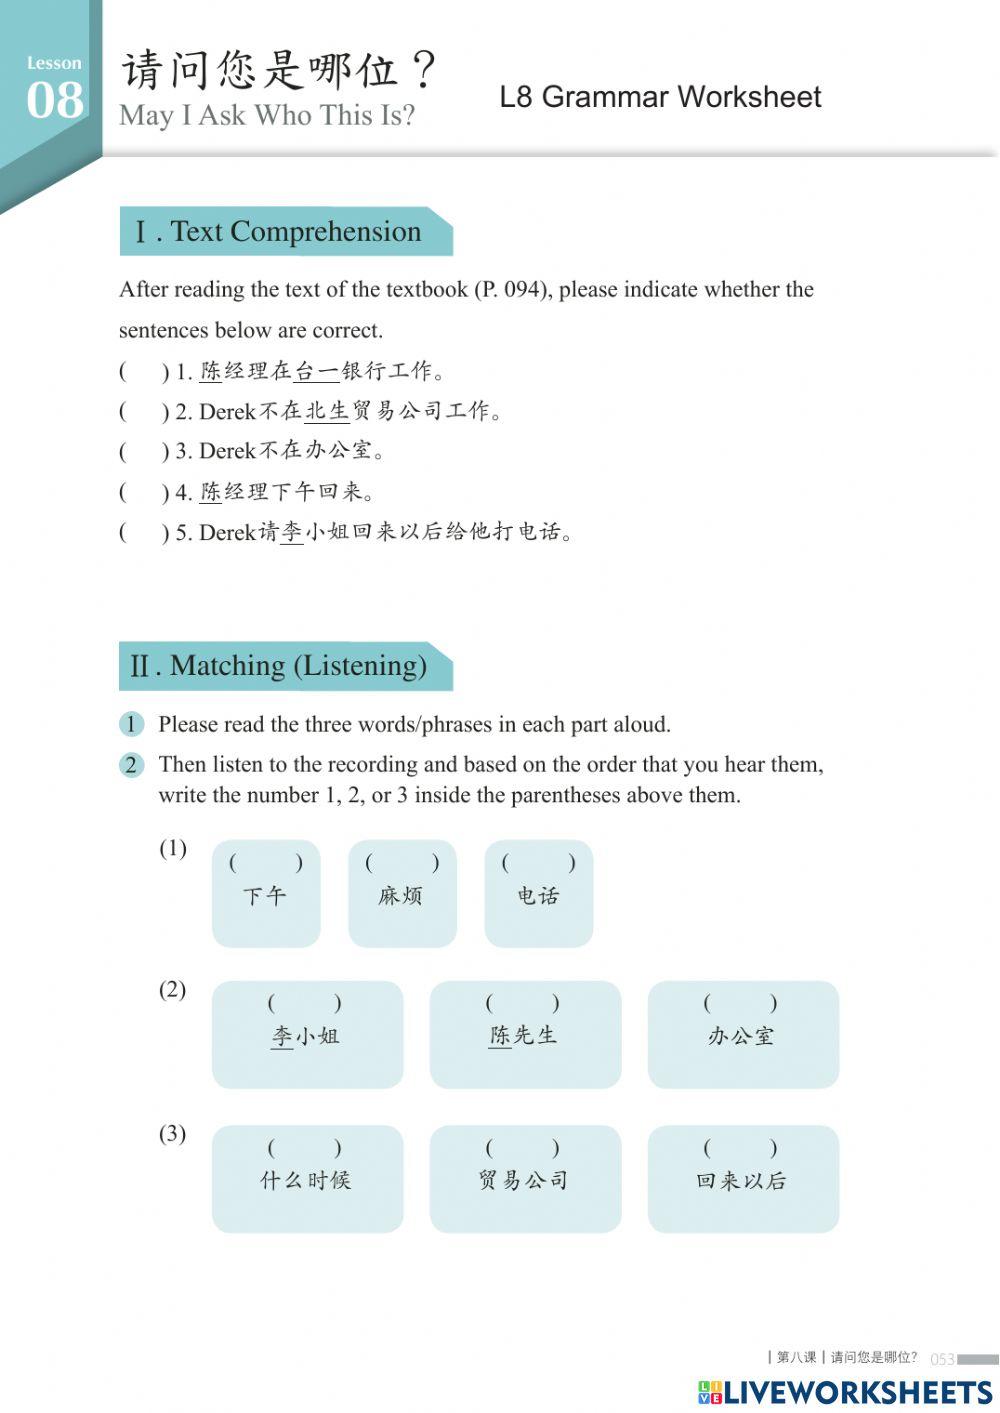 L8 Grammar Worksheet